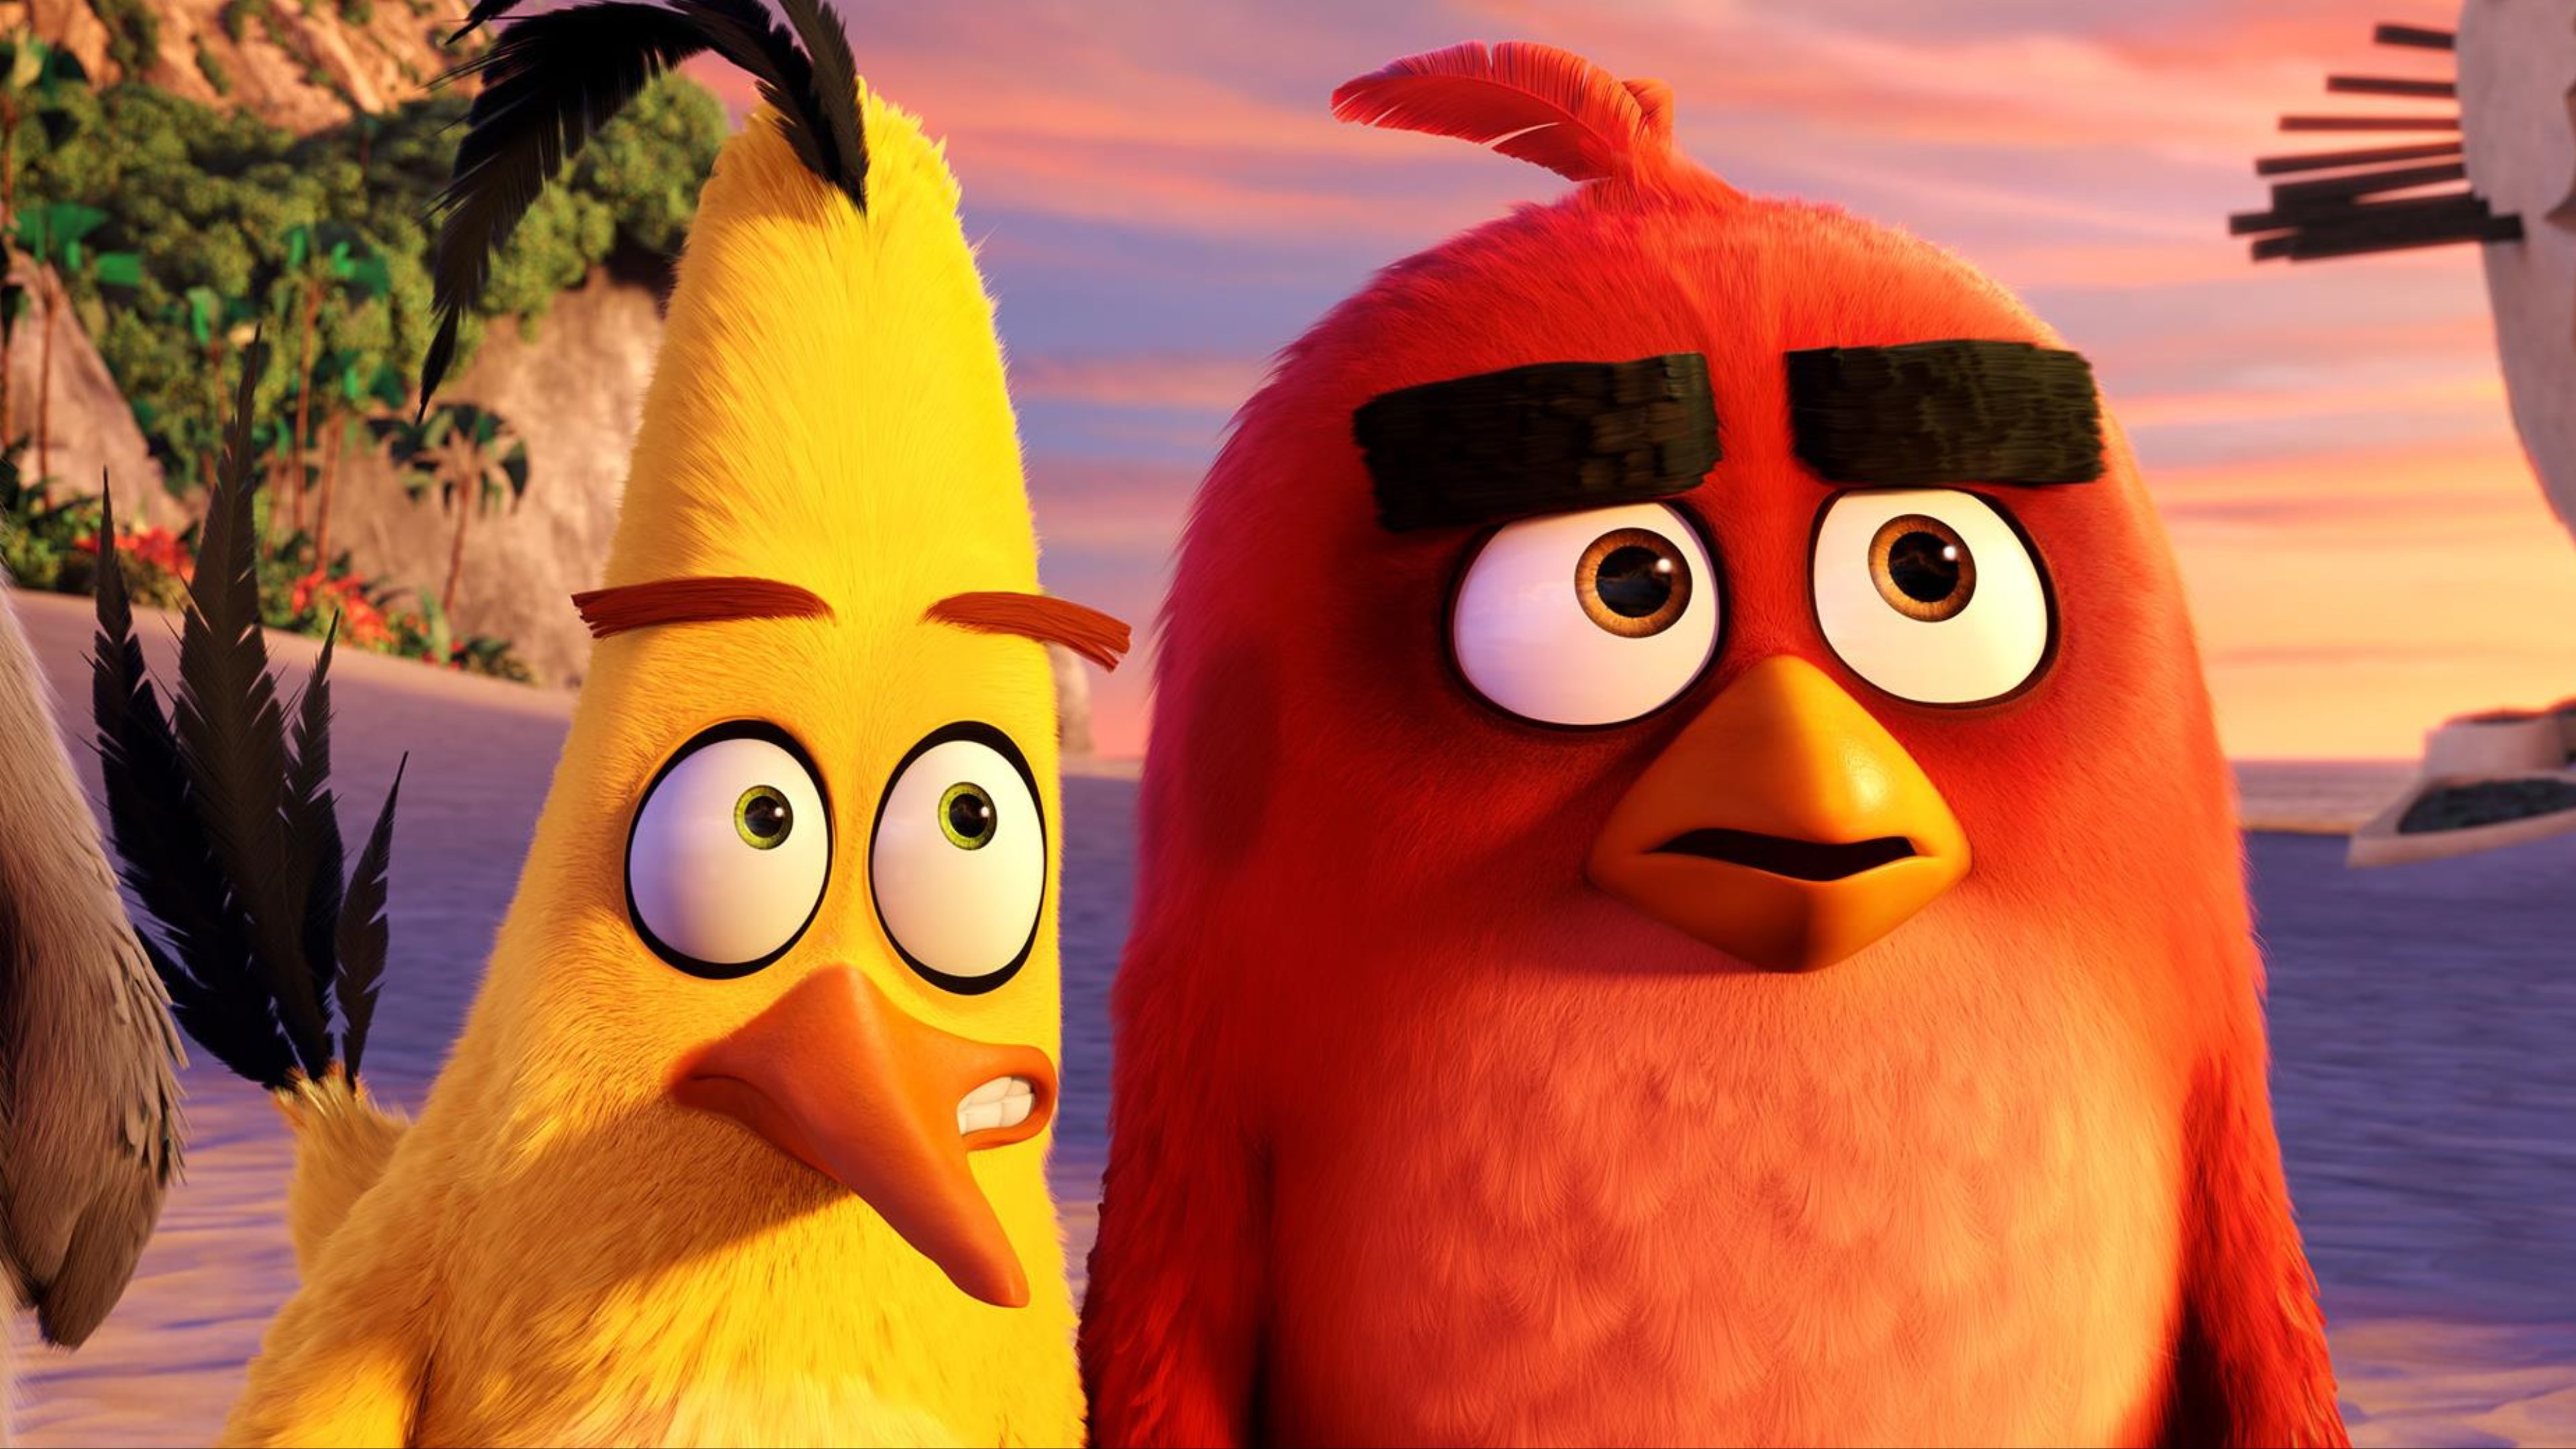 General 3840x2160 Angry Birds Angry Birds (Movie) movie scenes movies